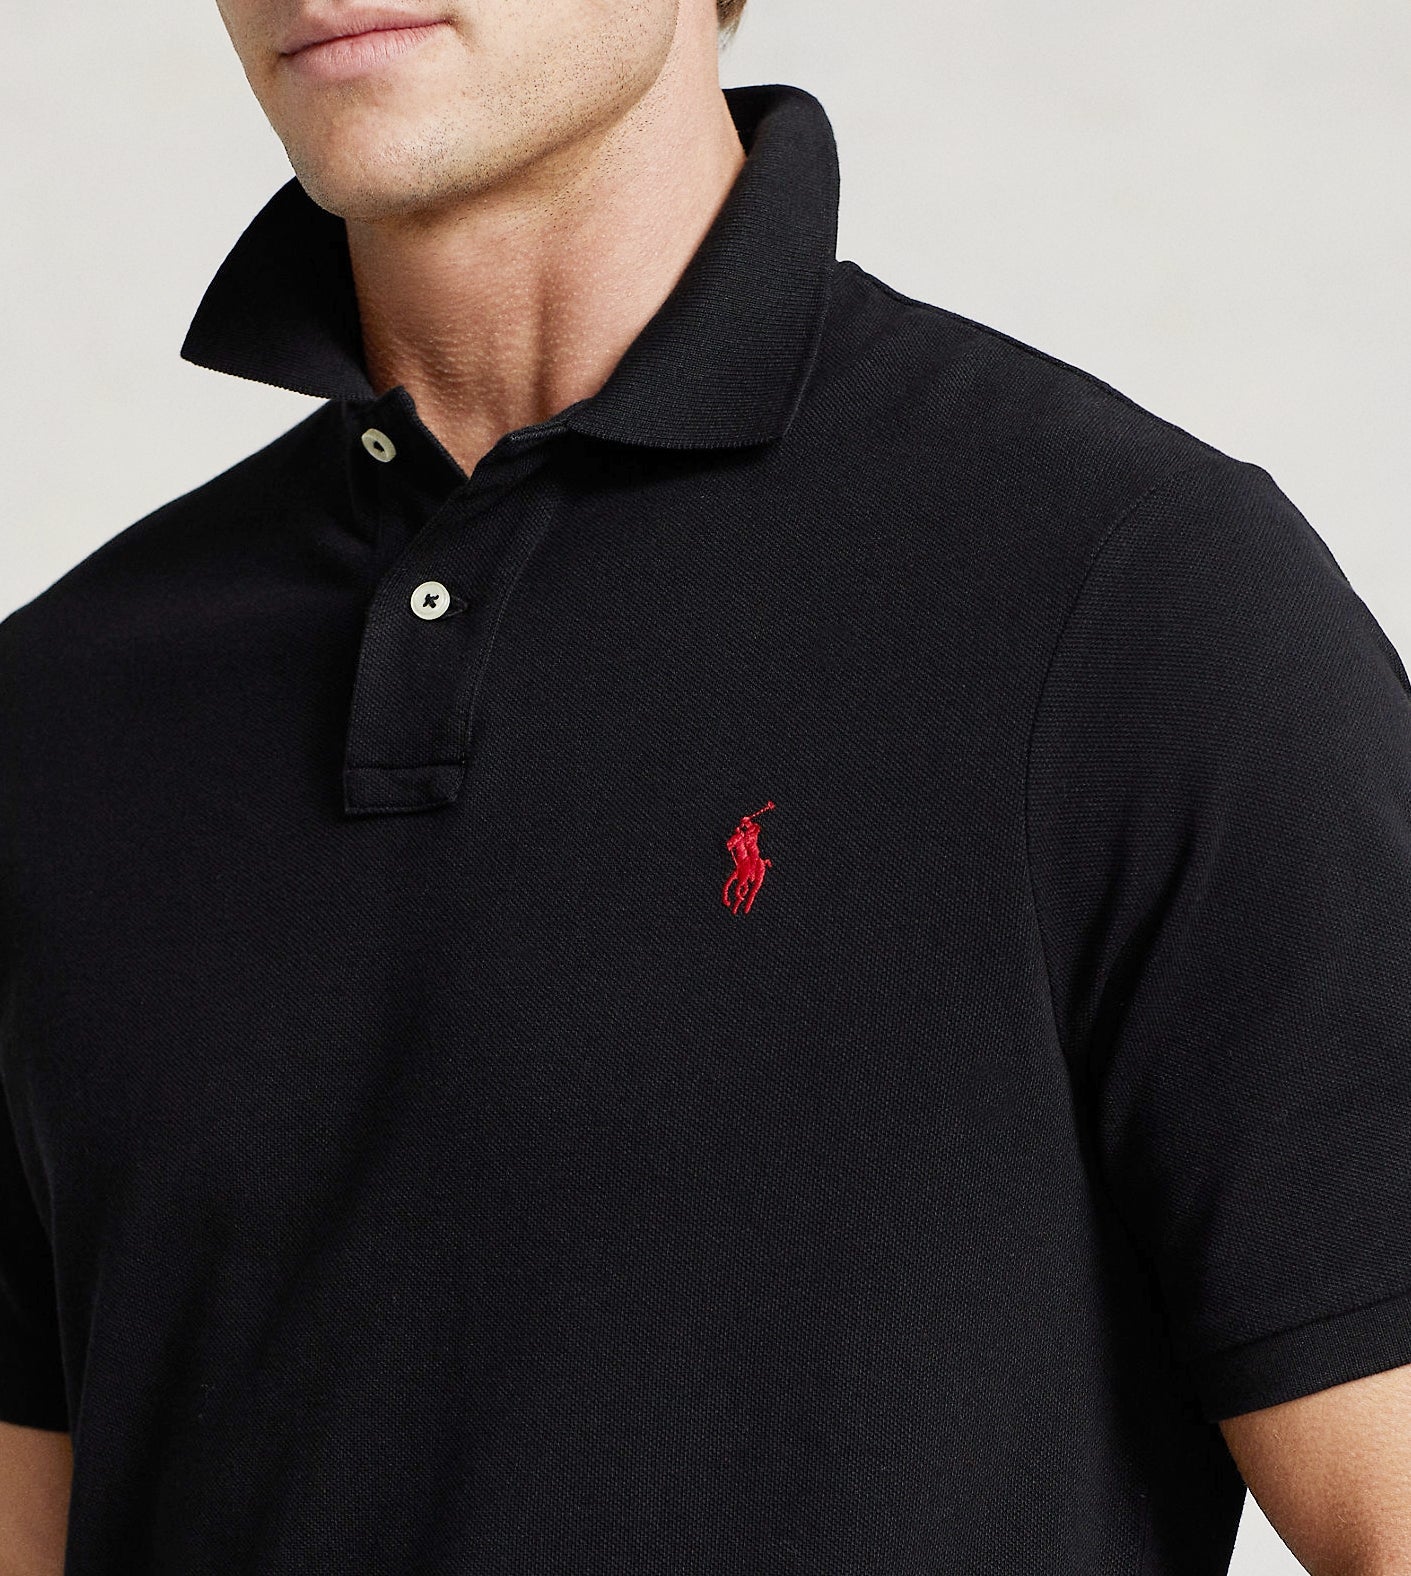 RL basic sp black exclusive polo shirt(00316) – brandsrepublic.pk